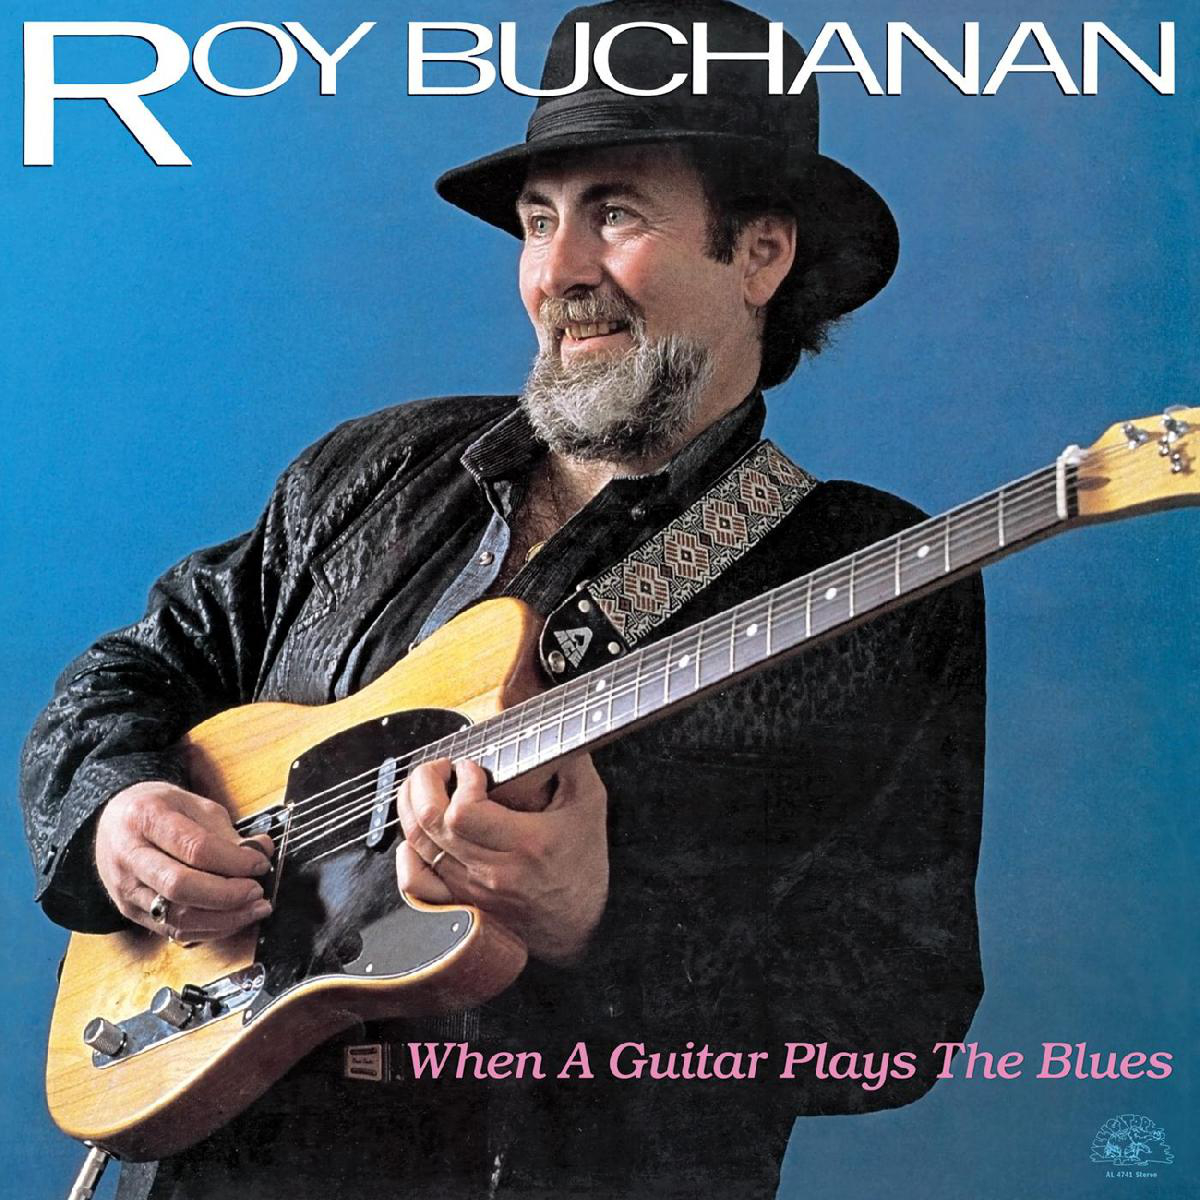 The (Vinyl) Plays - Roy Guitar When - Blues Buchanan A